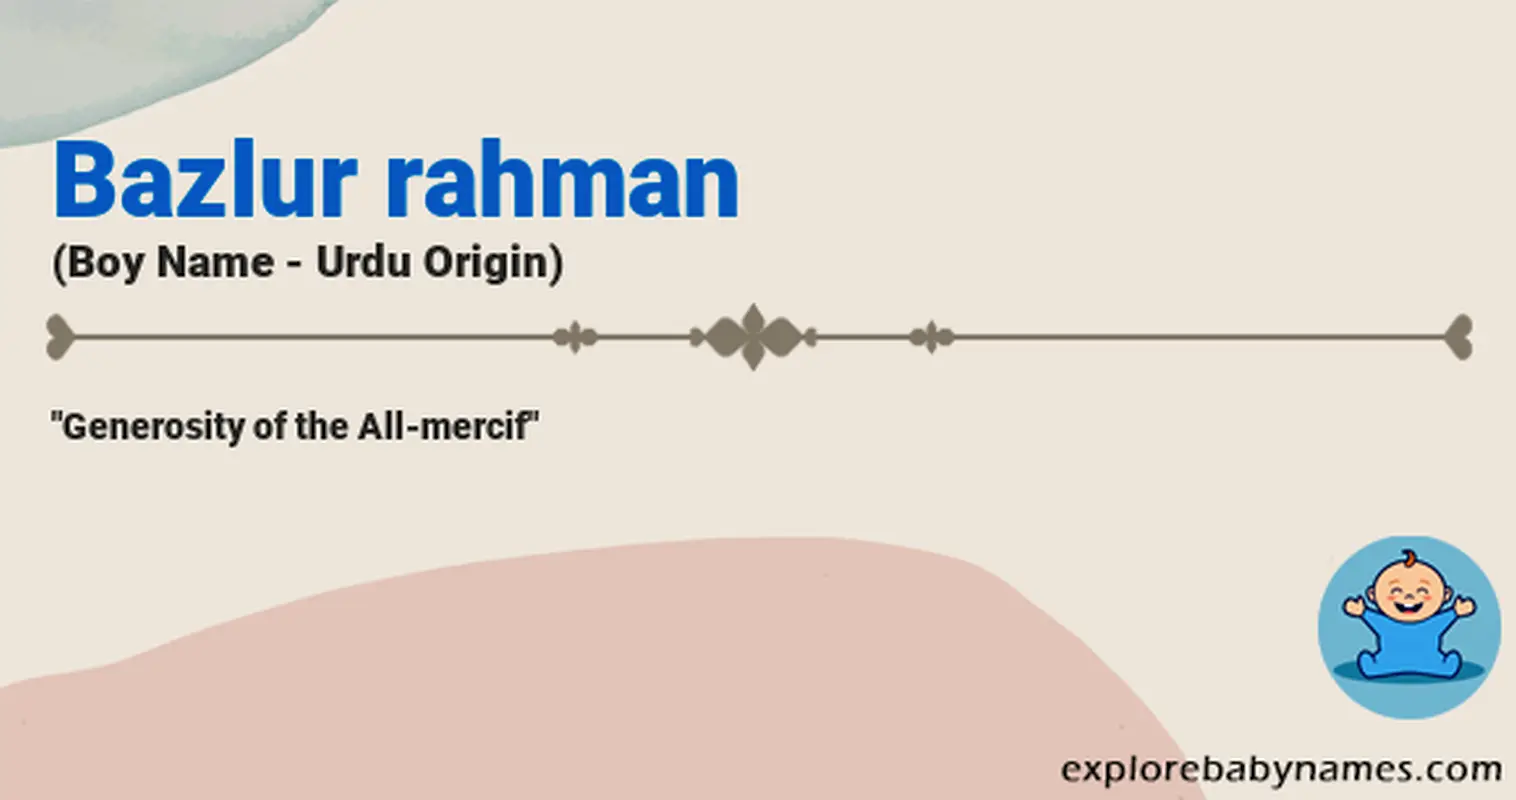 Meaning of Bazlur rahman